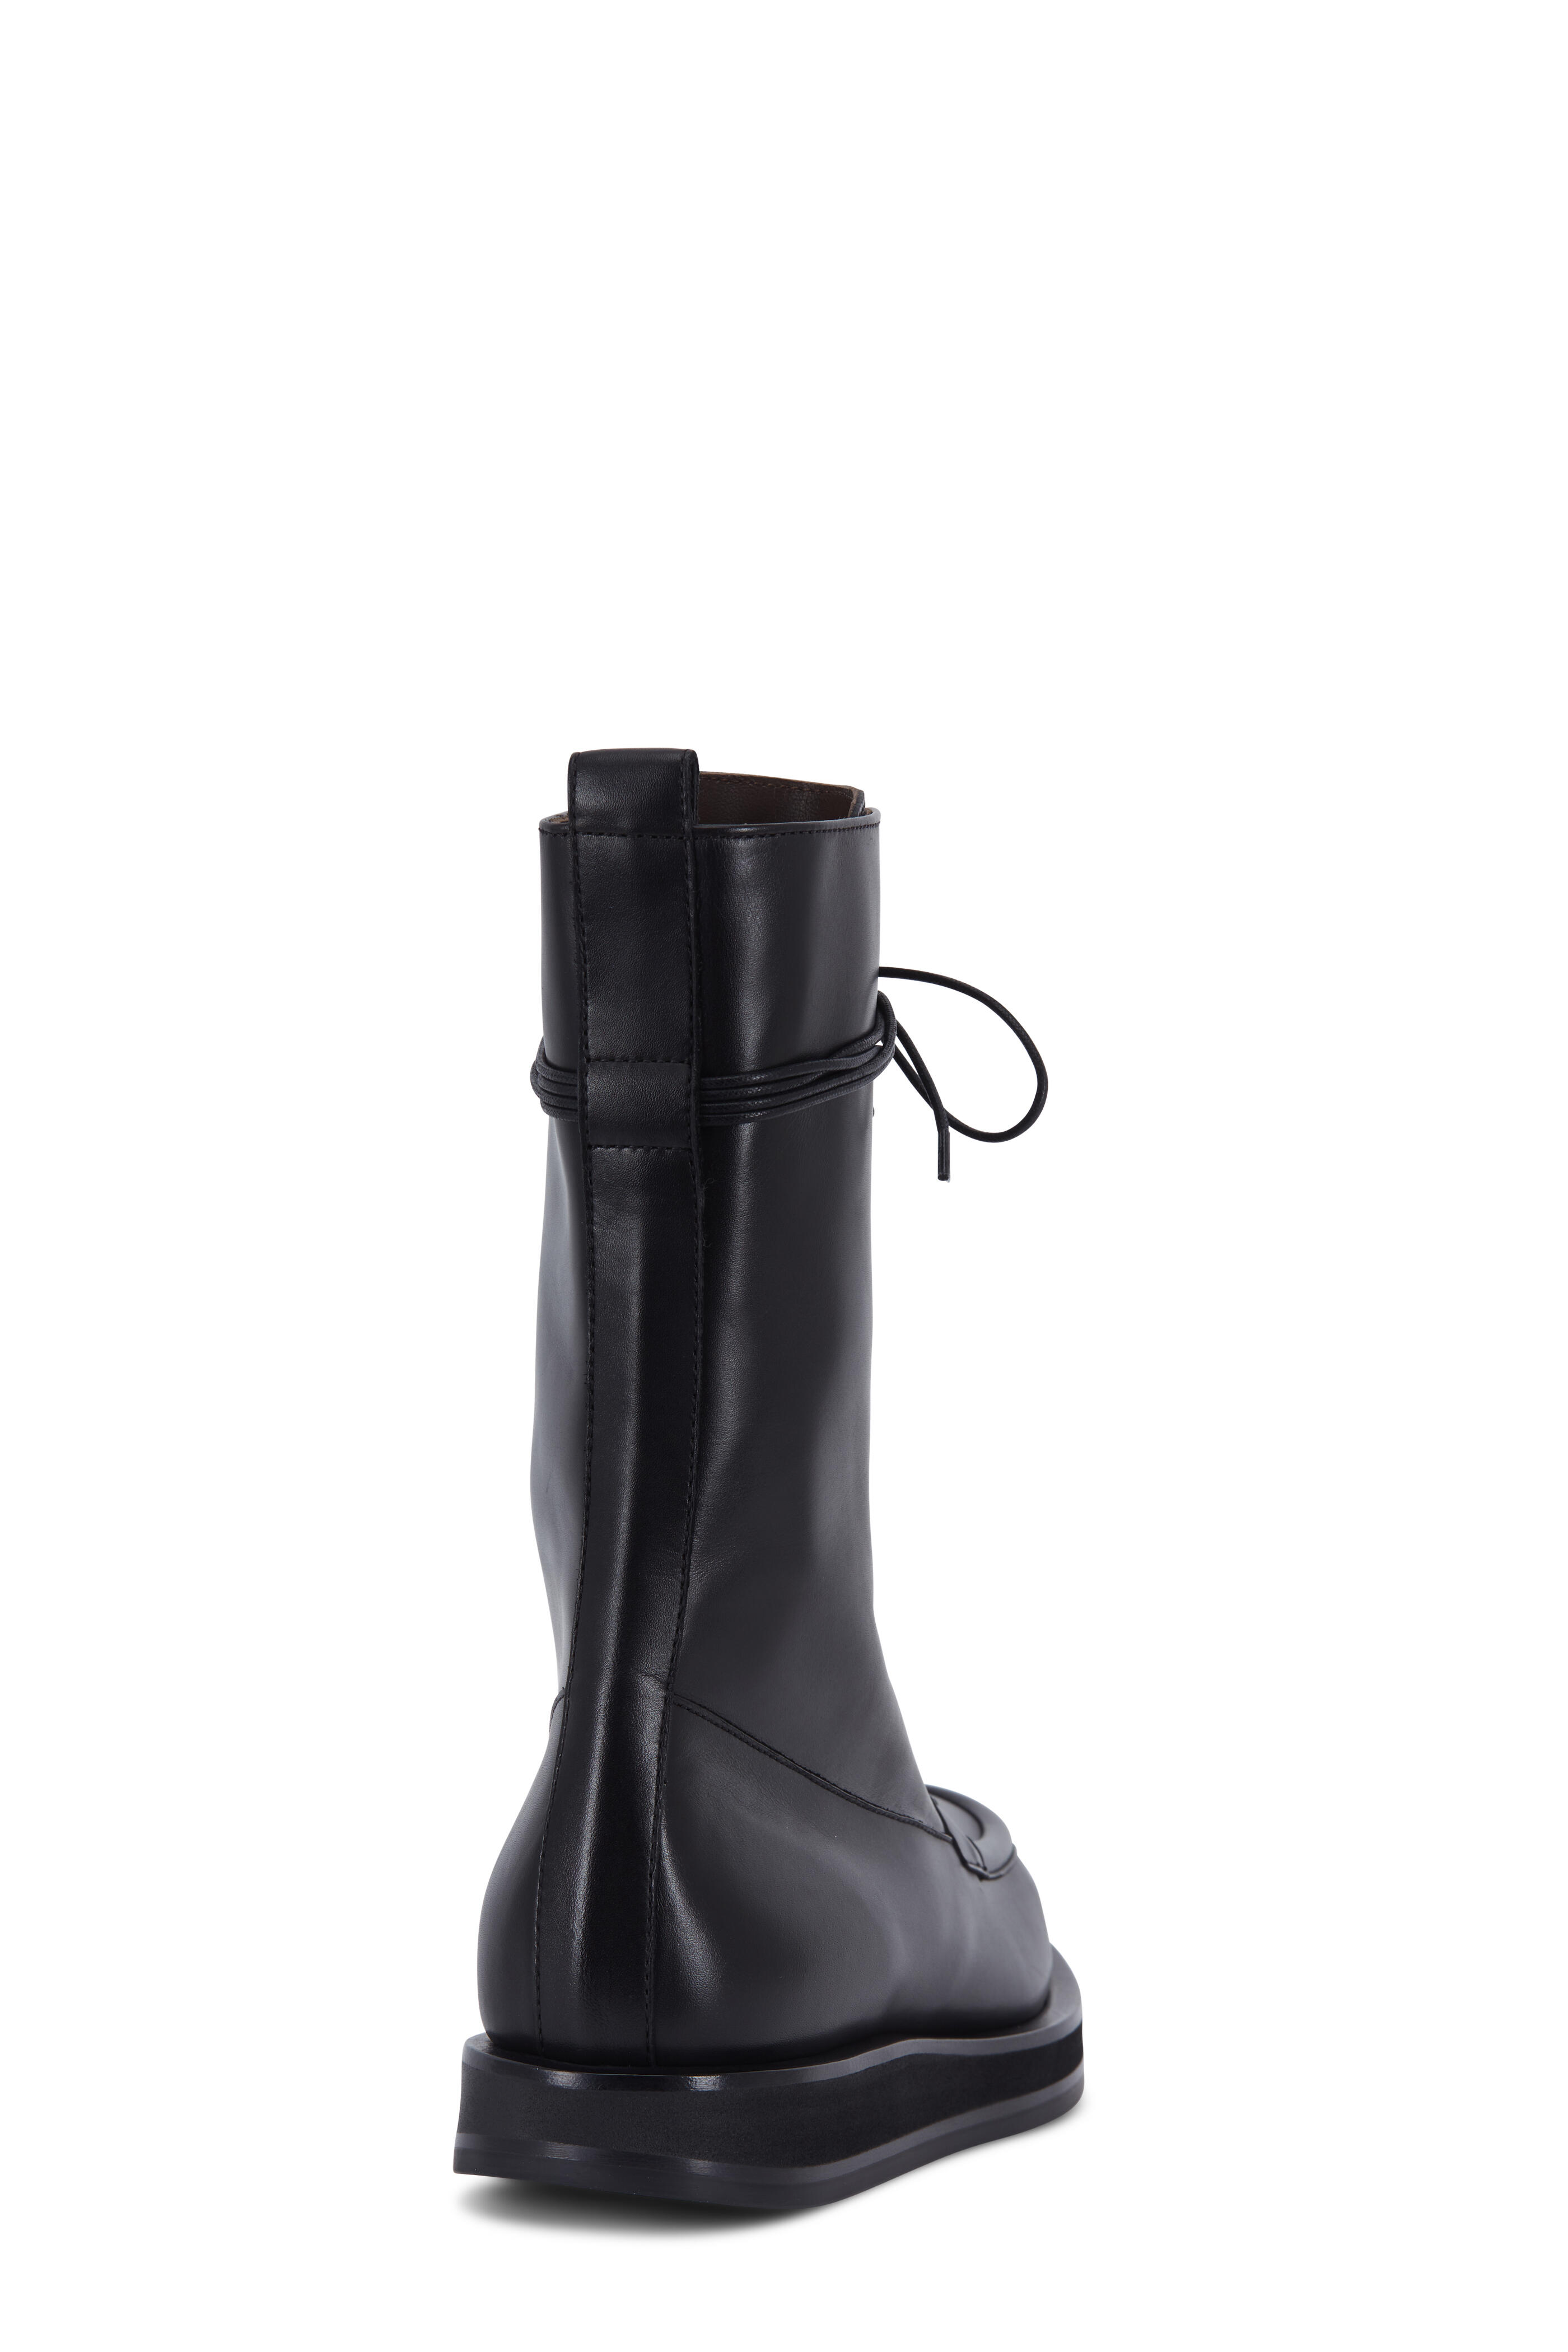 Valentino Garavani Heritage Calfskin Boot 60mm for Woman in Black